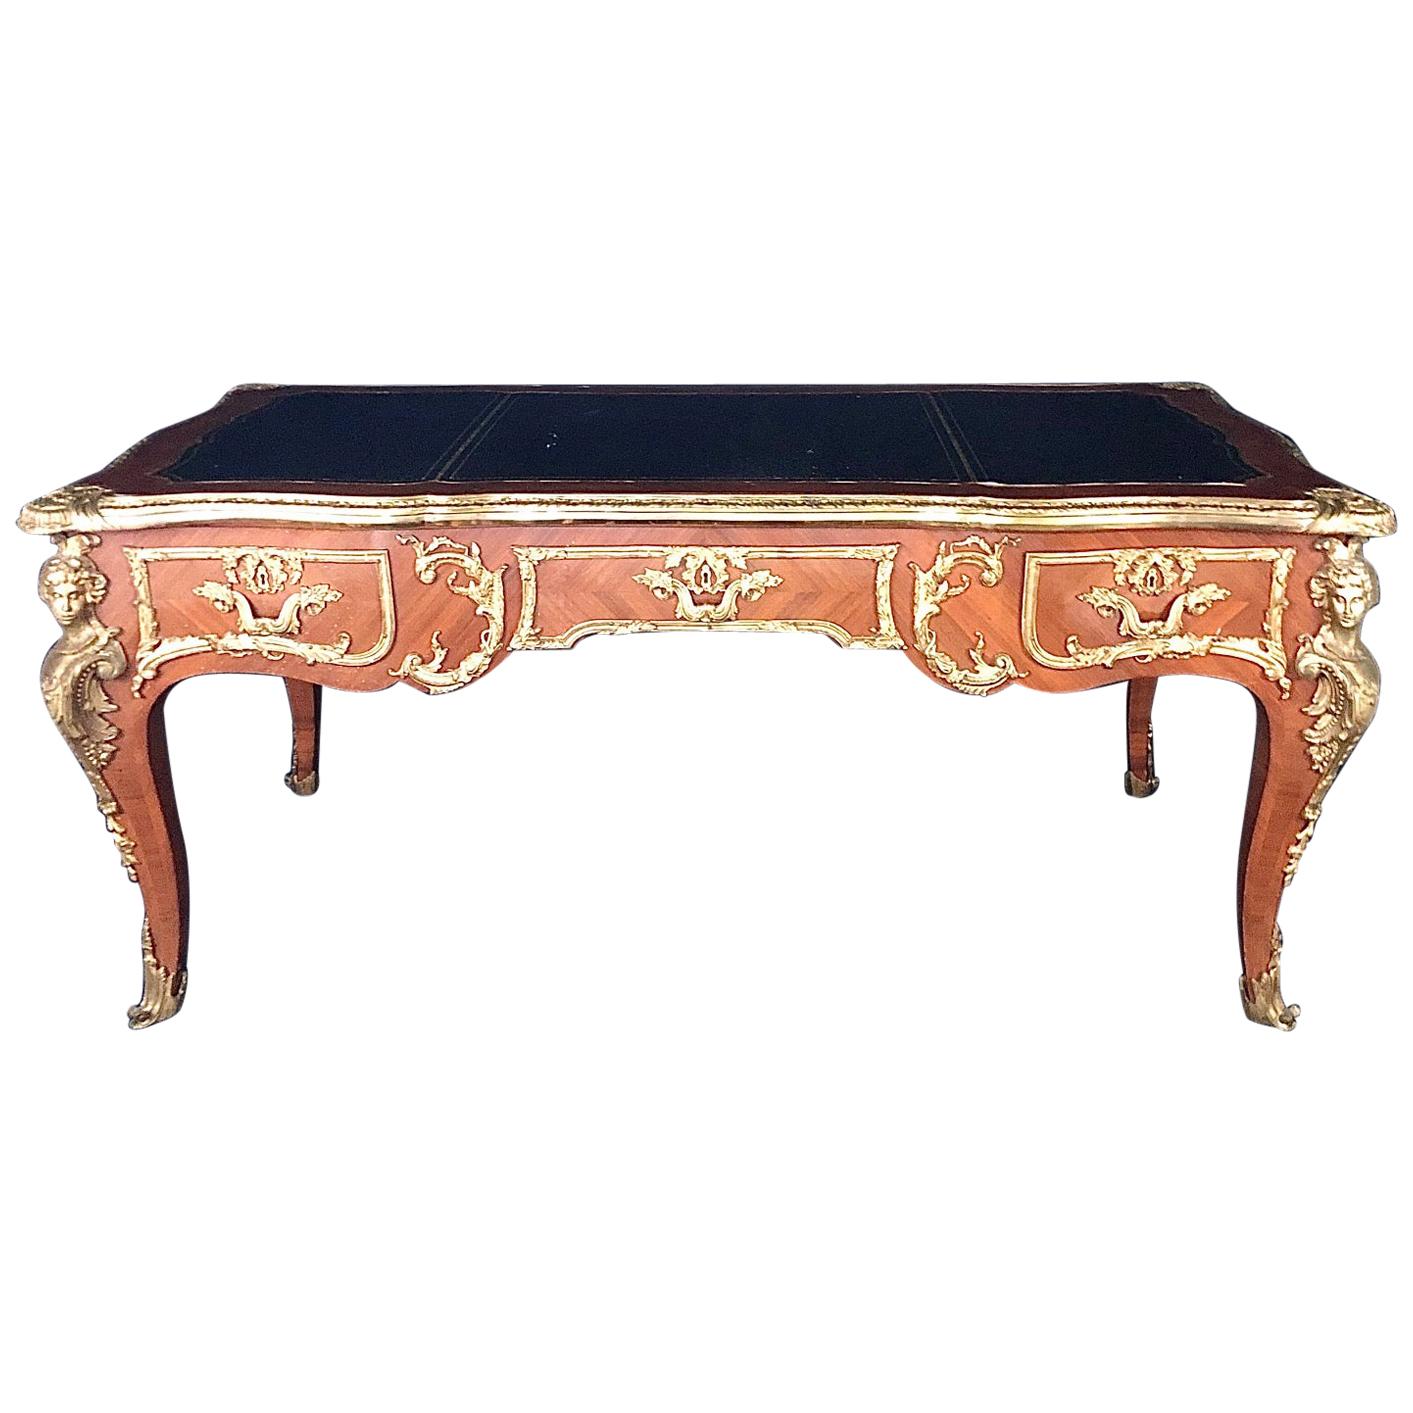 Ornate French Louis XV Style Two Sided Walnut and Ormolu Bureau Plat Desk